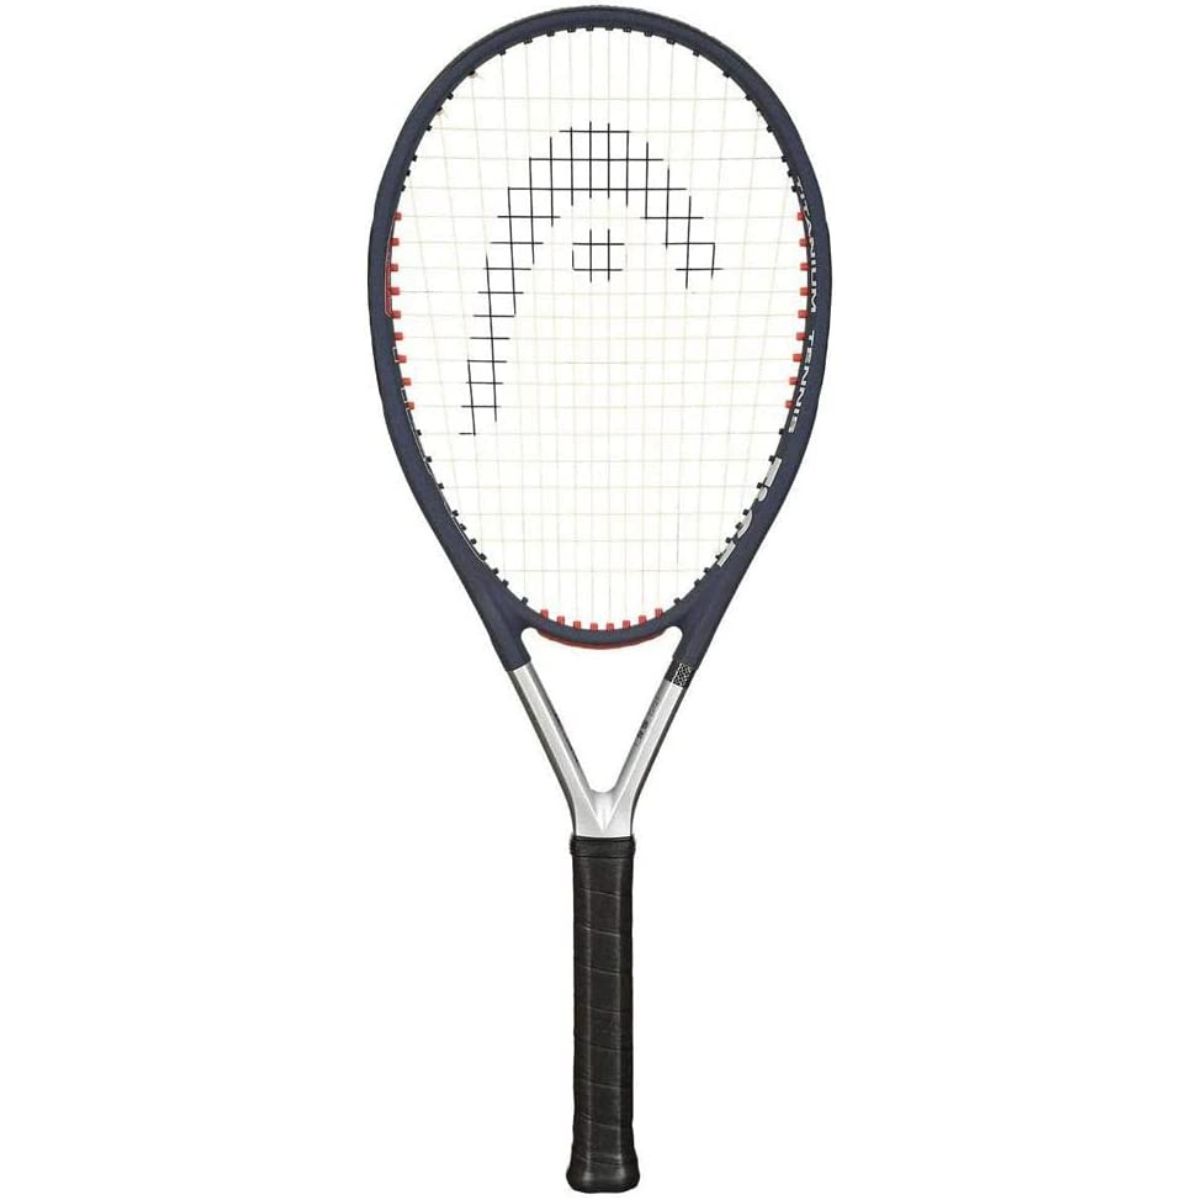 Head Ti S5 tennis racket review